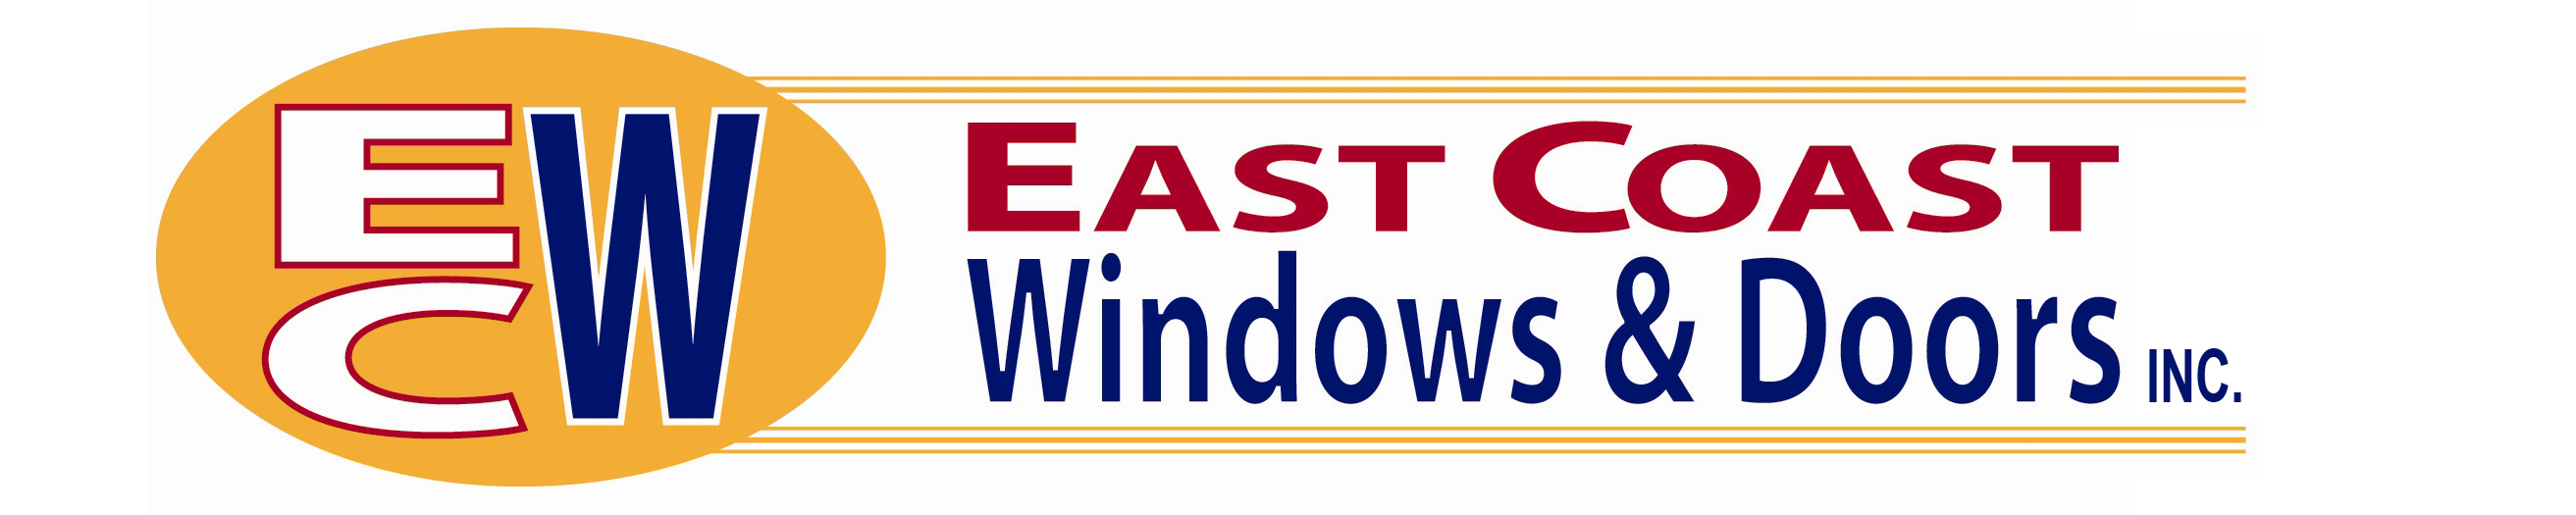 East Coast Windows & Doors, Inc. Logo